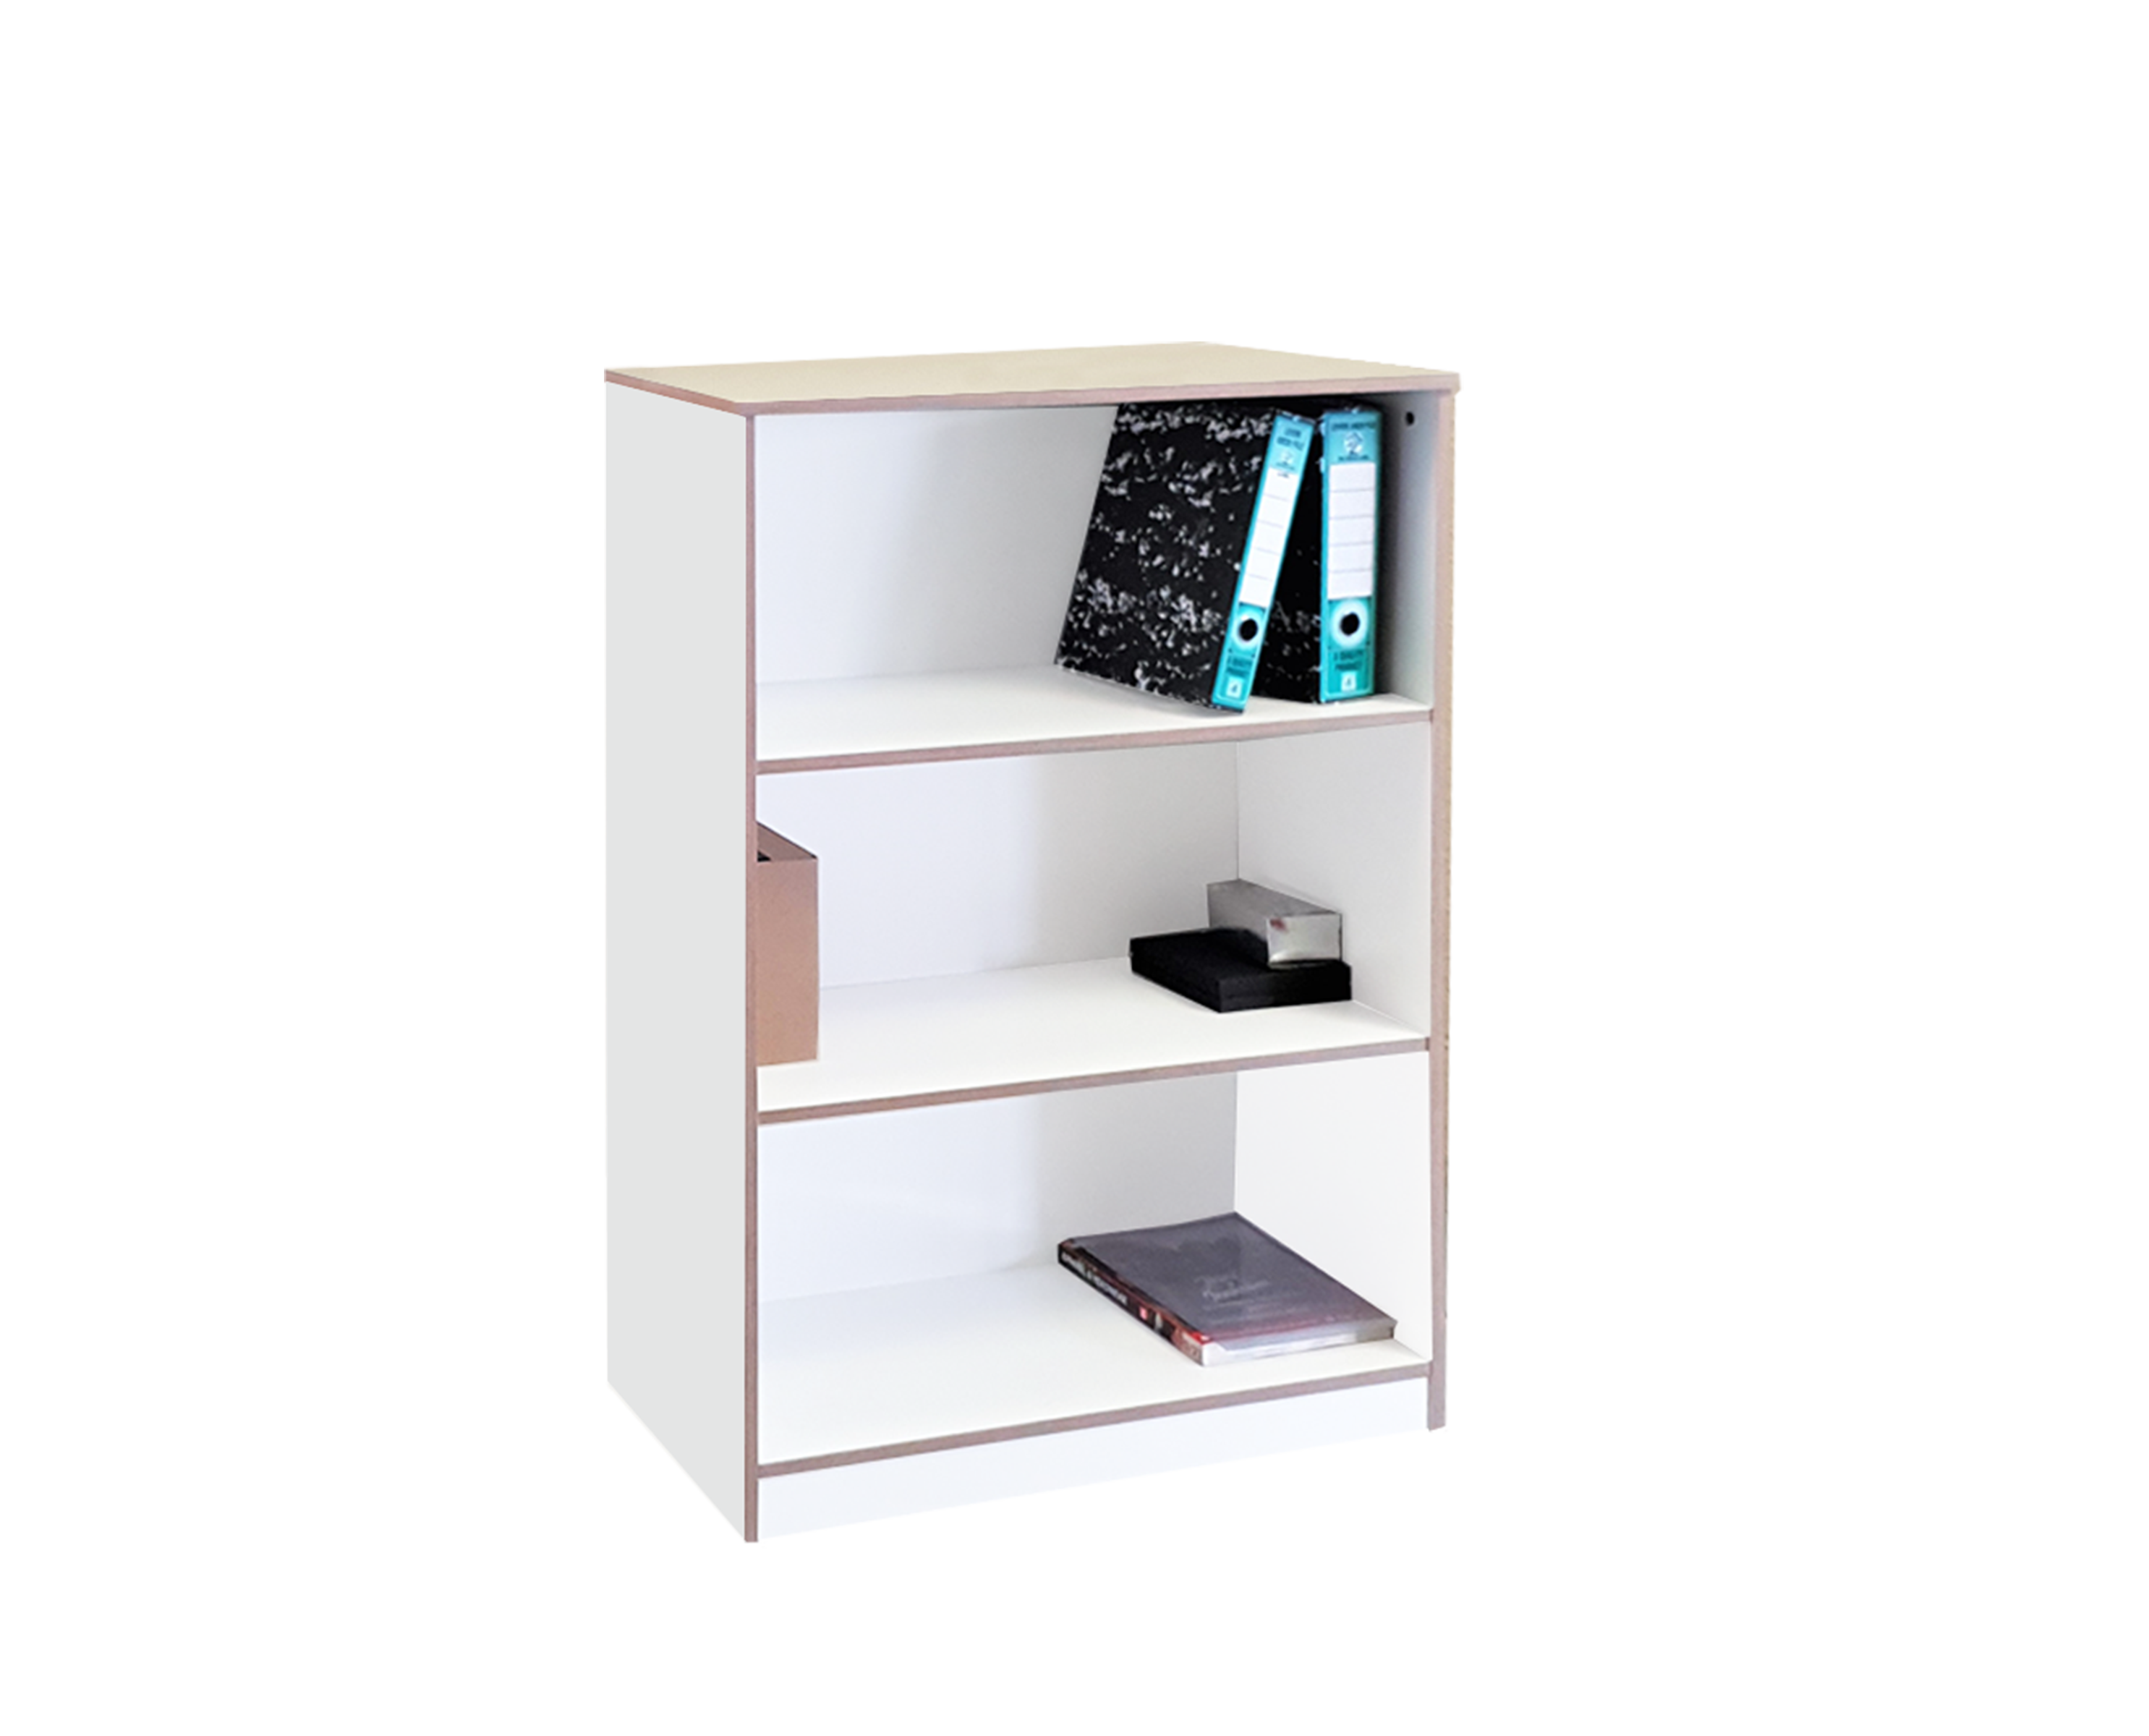 3-Tier White Bookshelf for Stylish Organization - 1150H